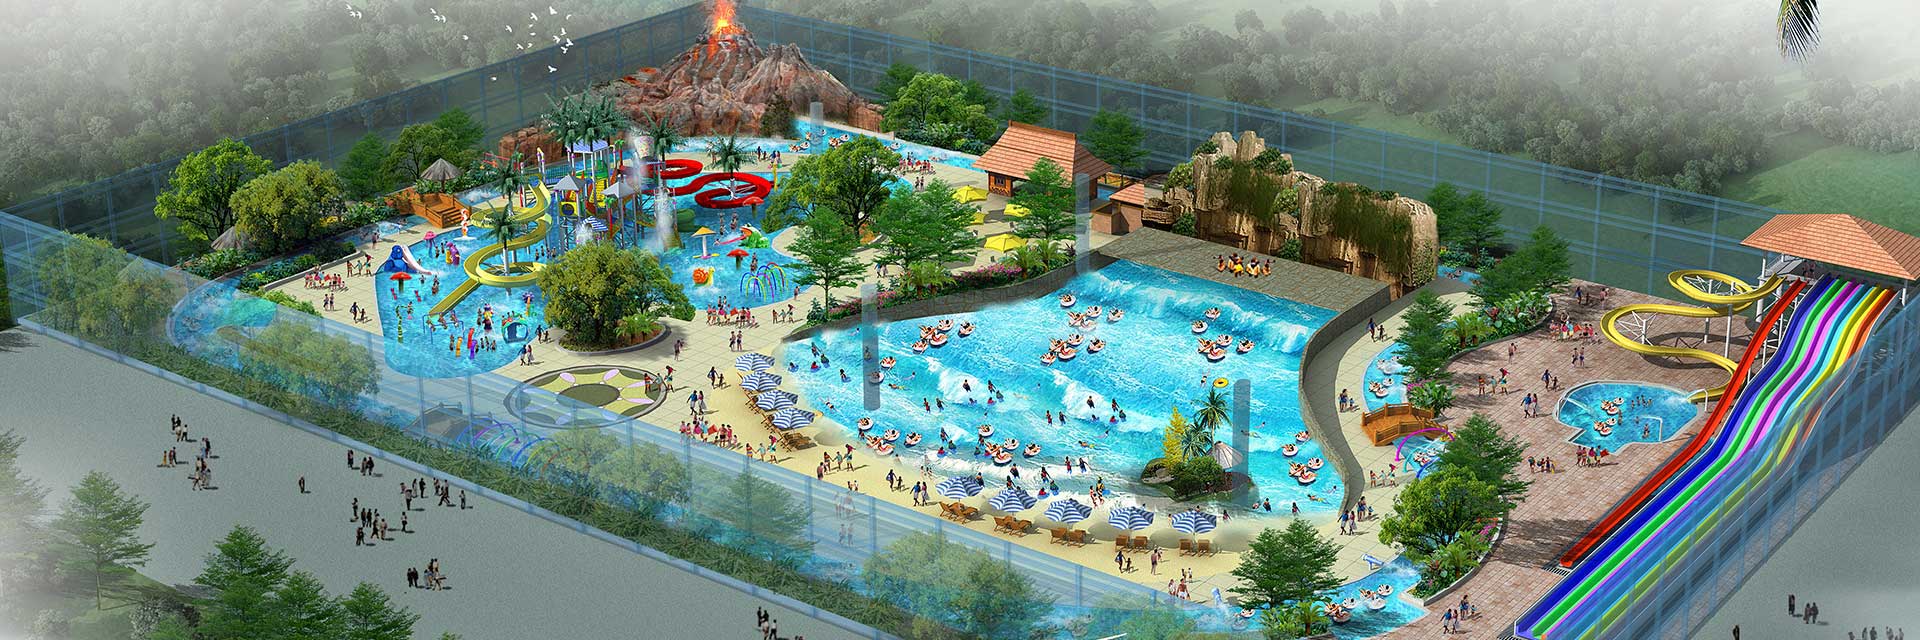 Design Layout for Water Amusement Park Design